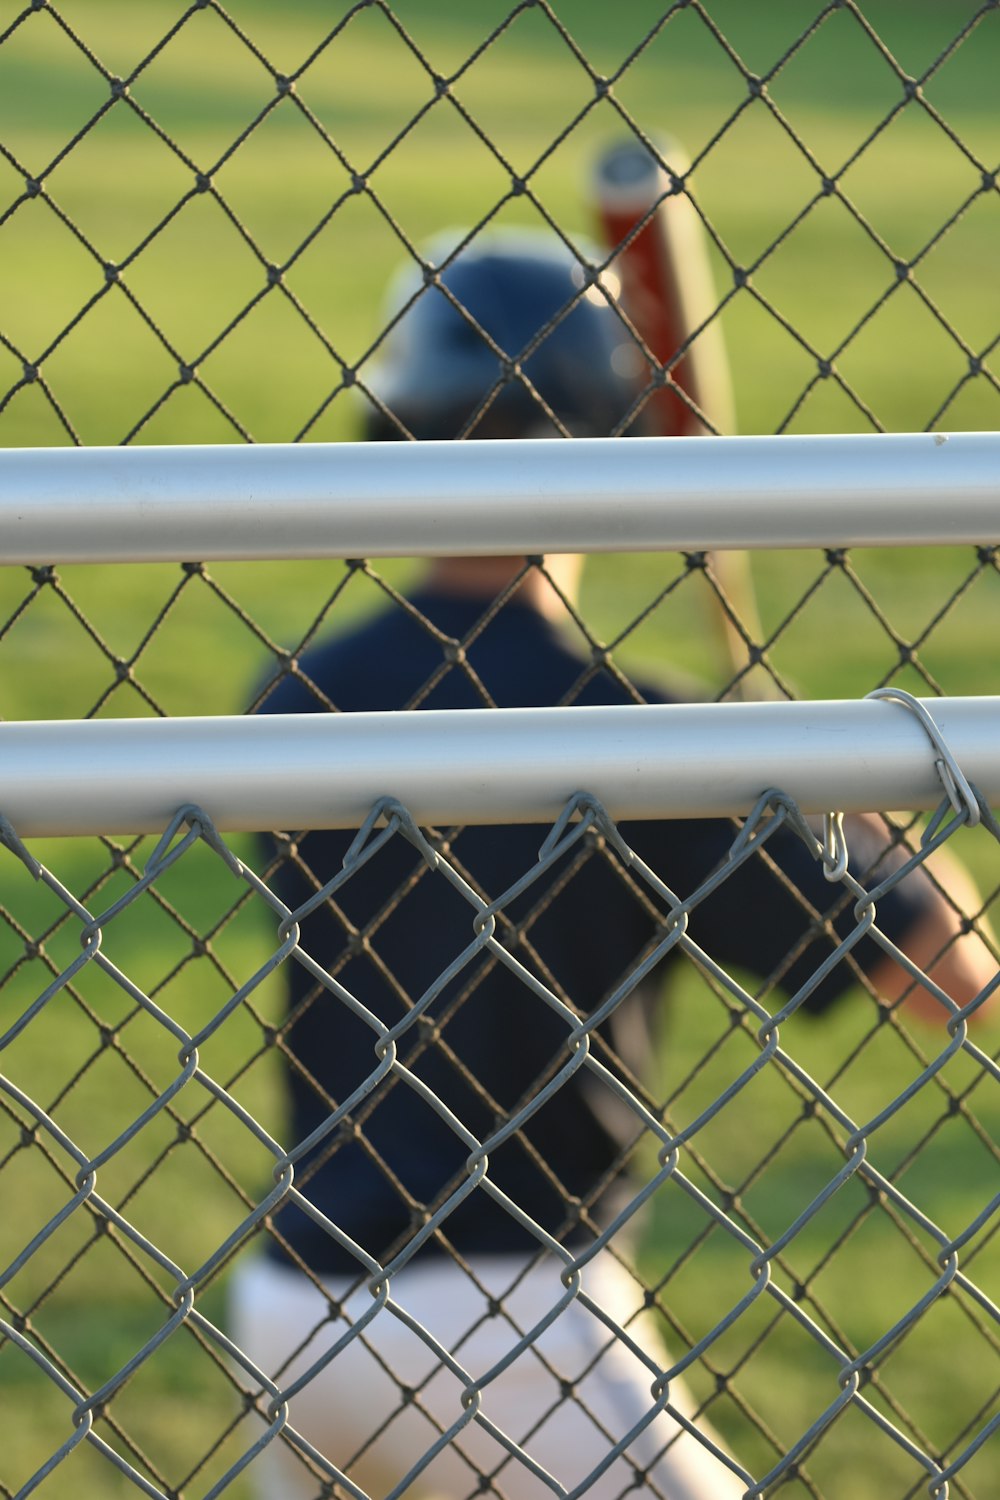 a baseball player holding a bat behind a fence